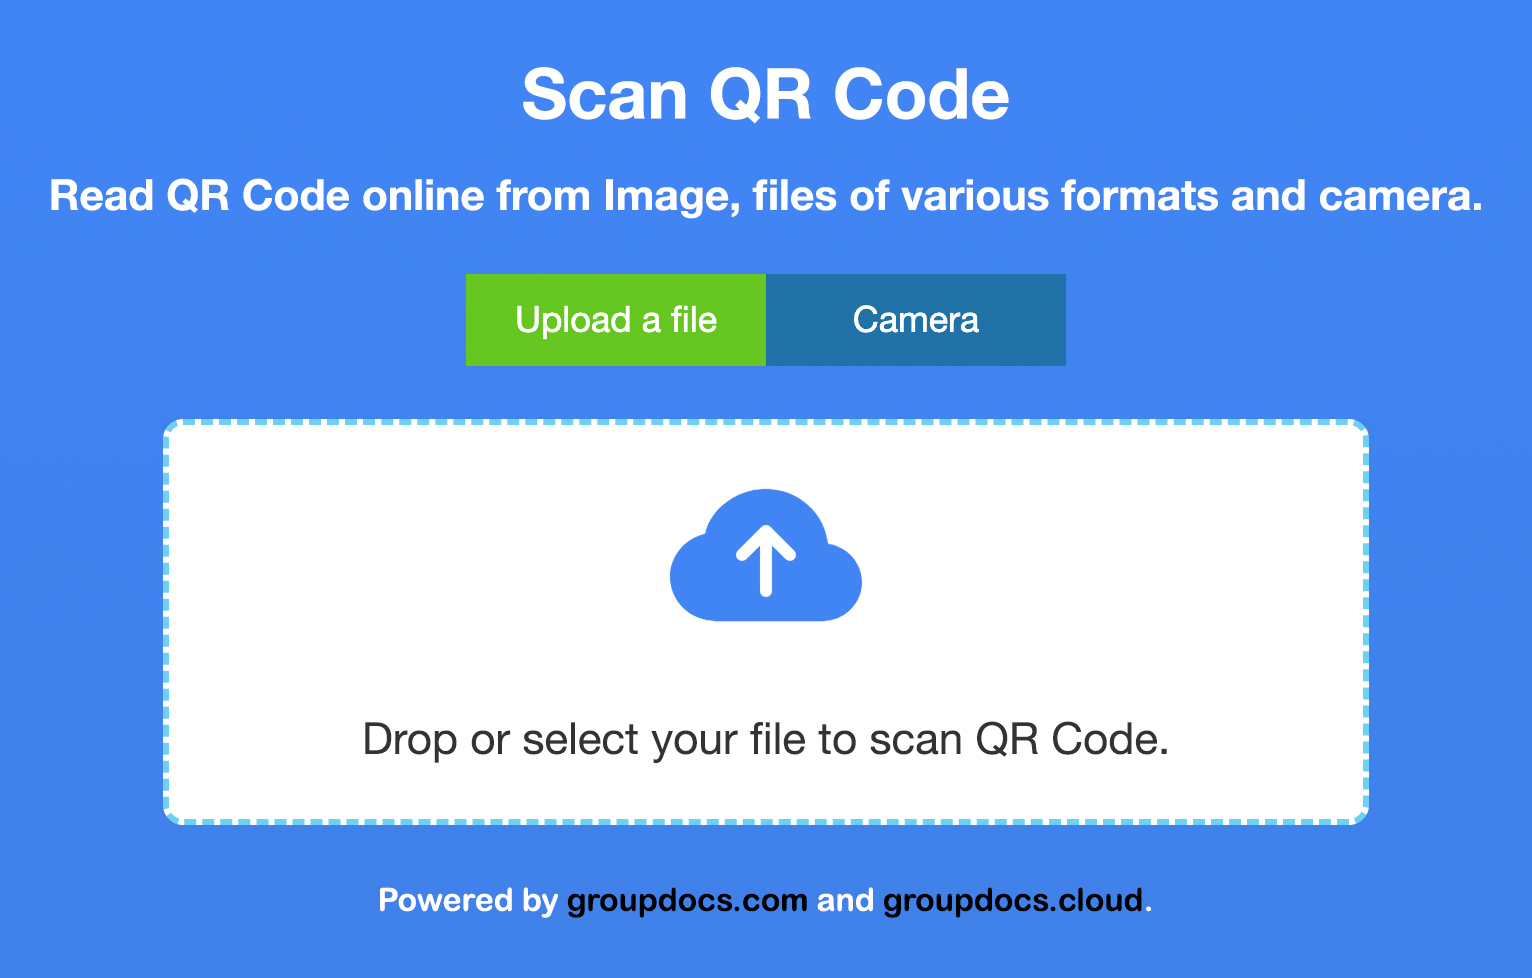 Naskenujte obrázek QR kódu online